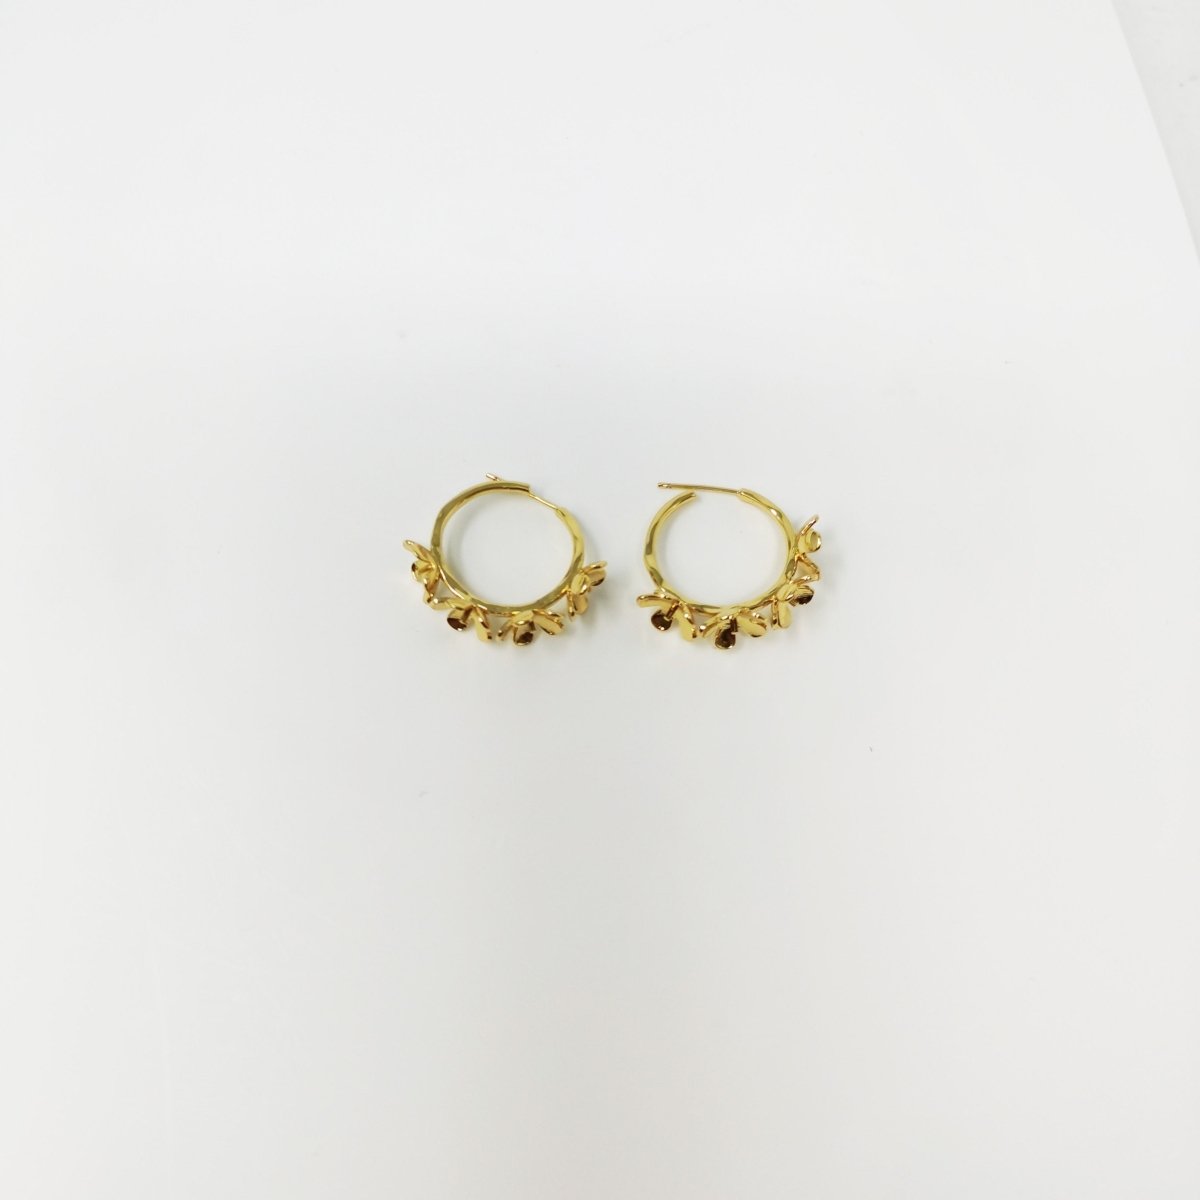 24k Vermeil Gold Earrings, Hoop Earrings, Medium Hoop, Floral Earring, Gift for Her, Earrings for Women, Everyday Wear Earrings, K-620 - DLUXCA